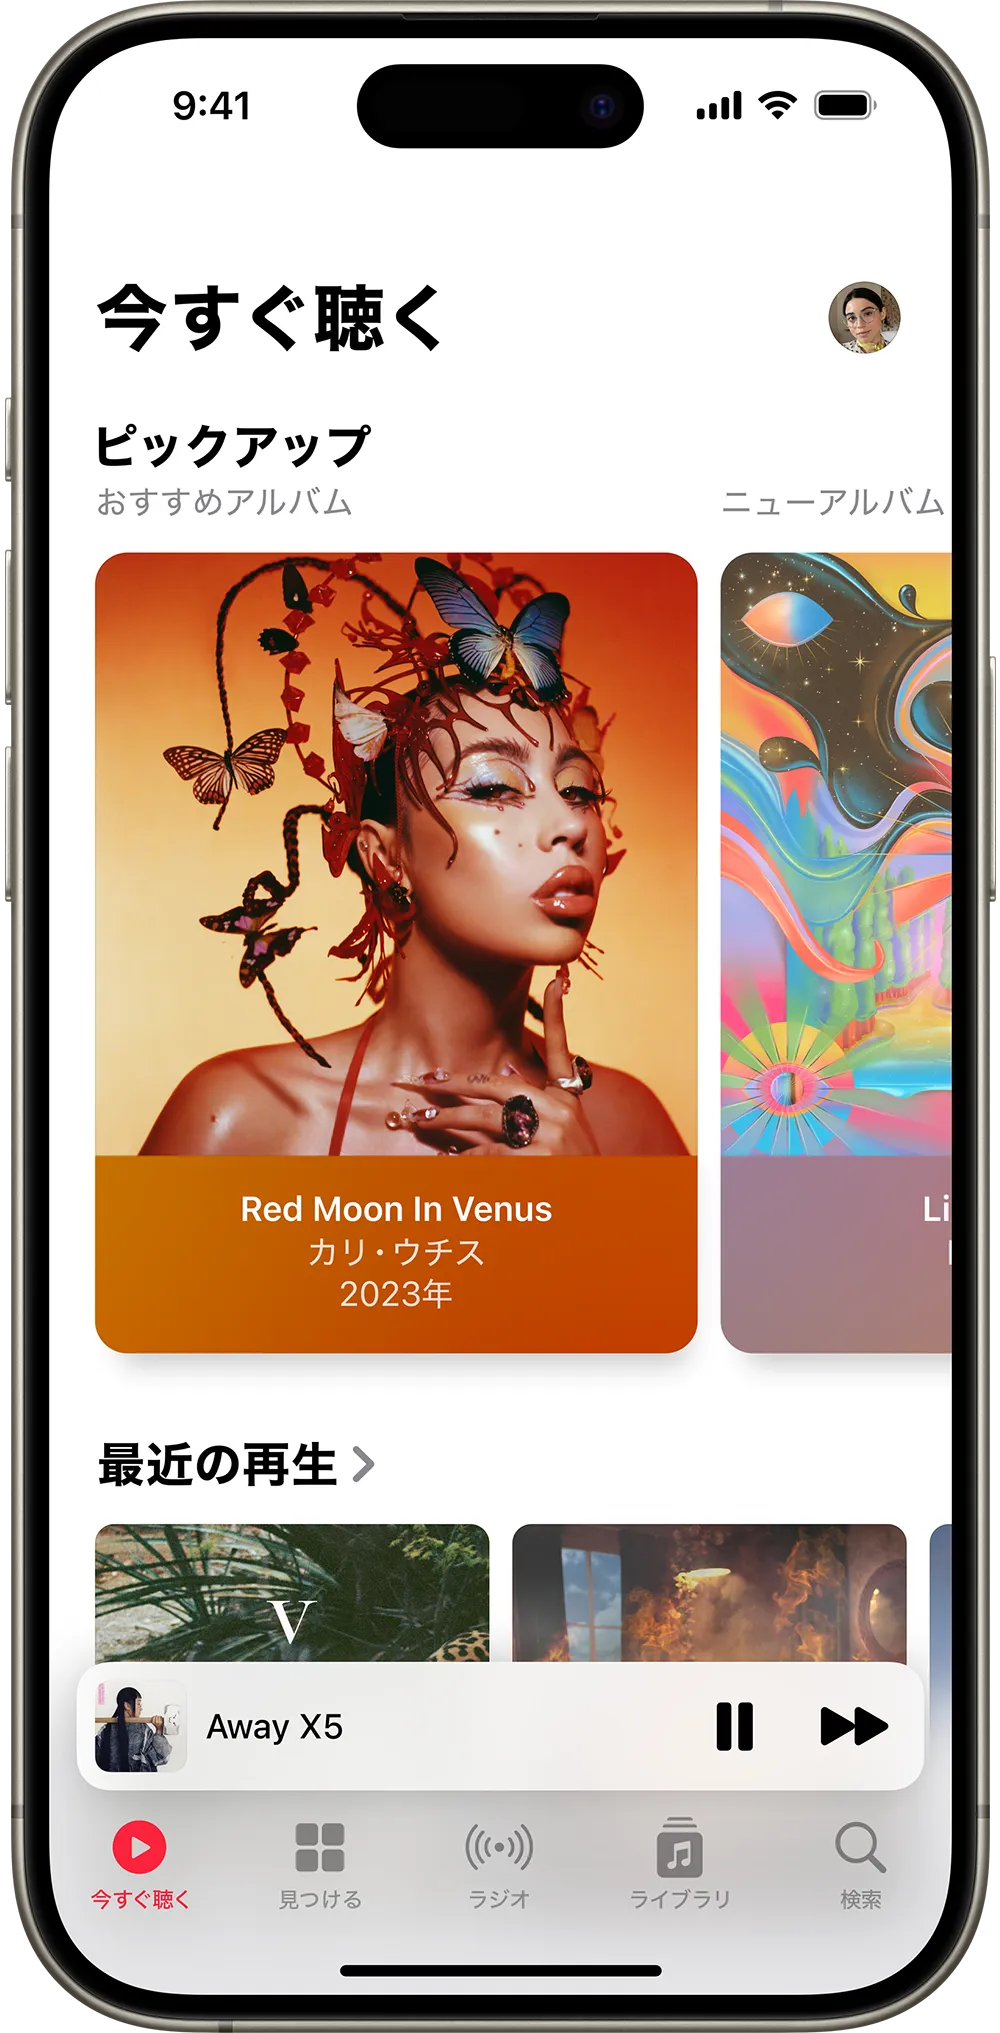 iPhone Apple Music アプリ画面